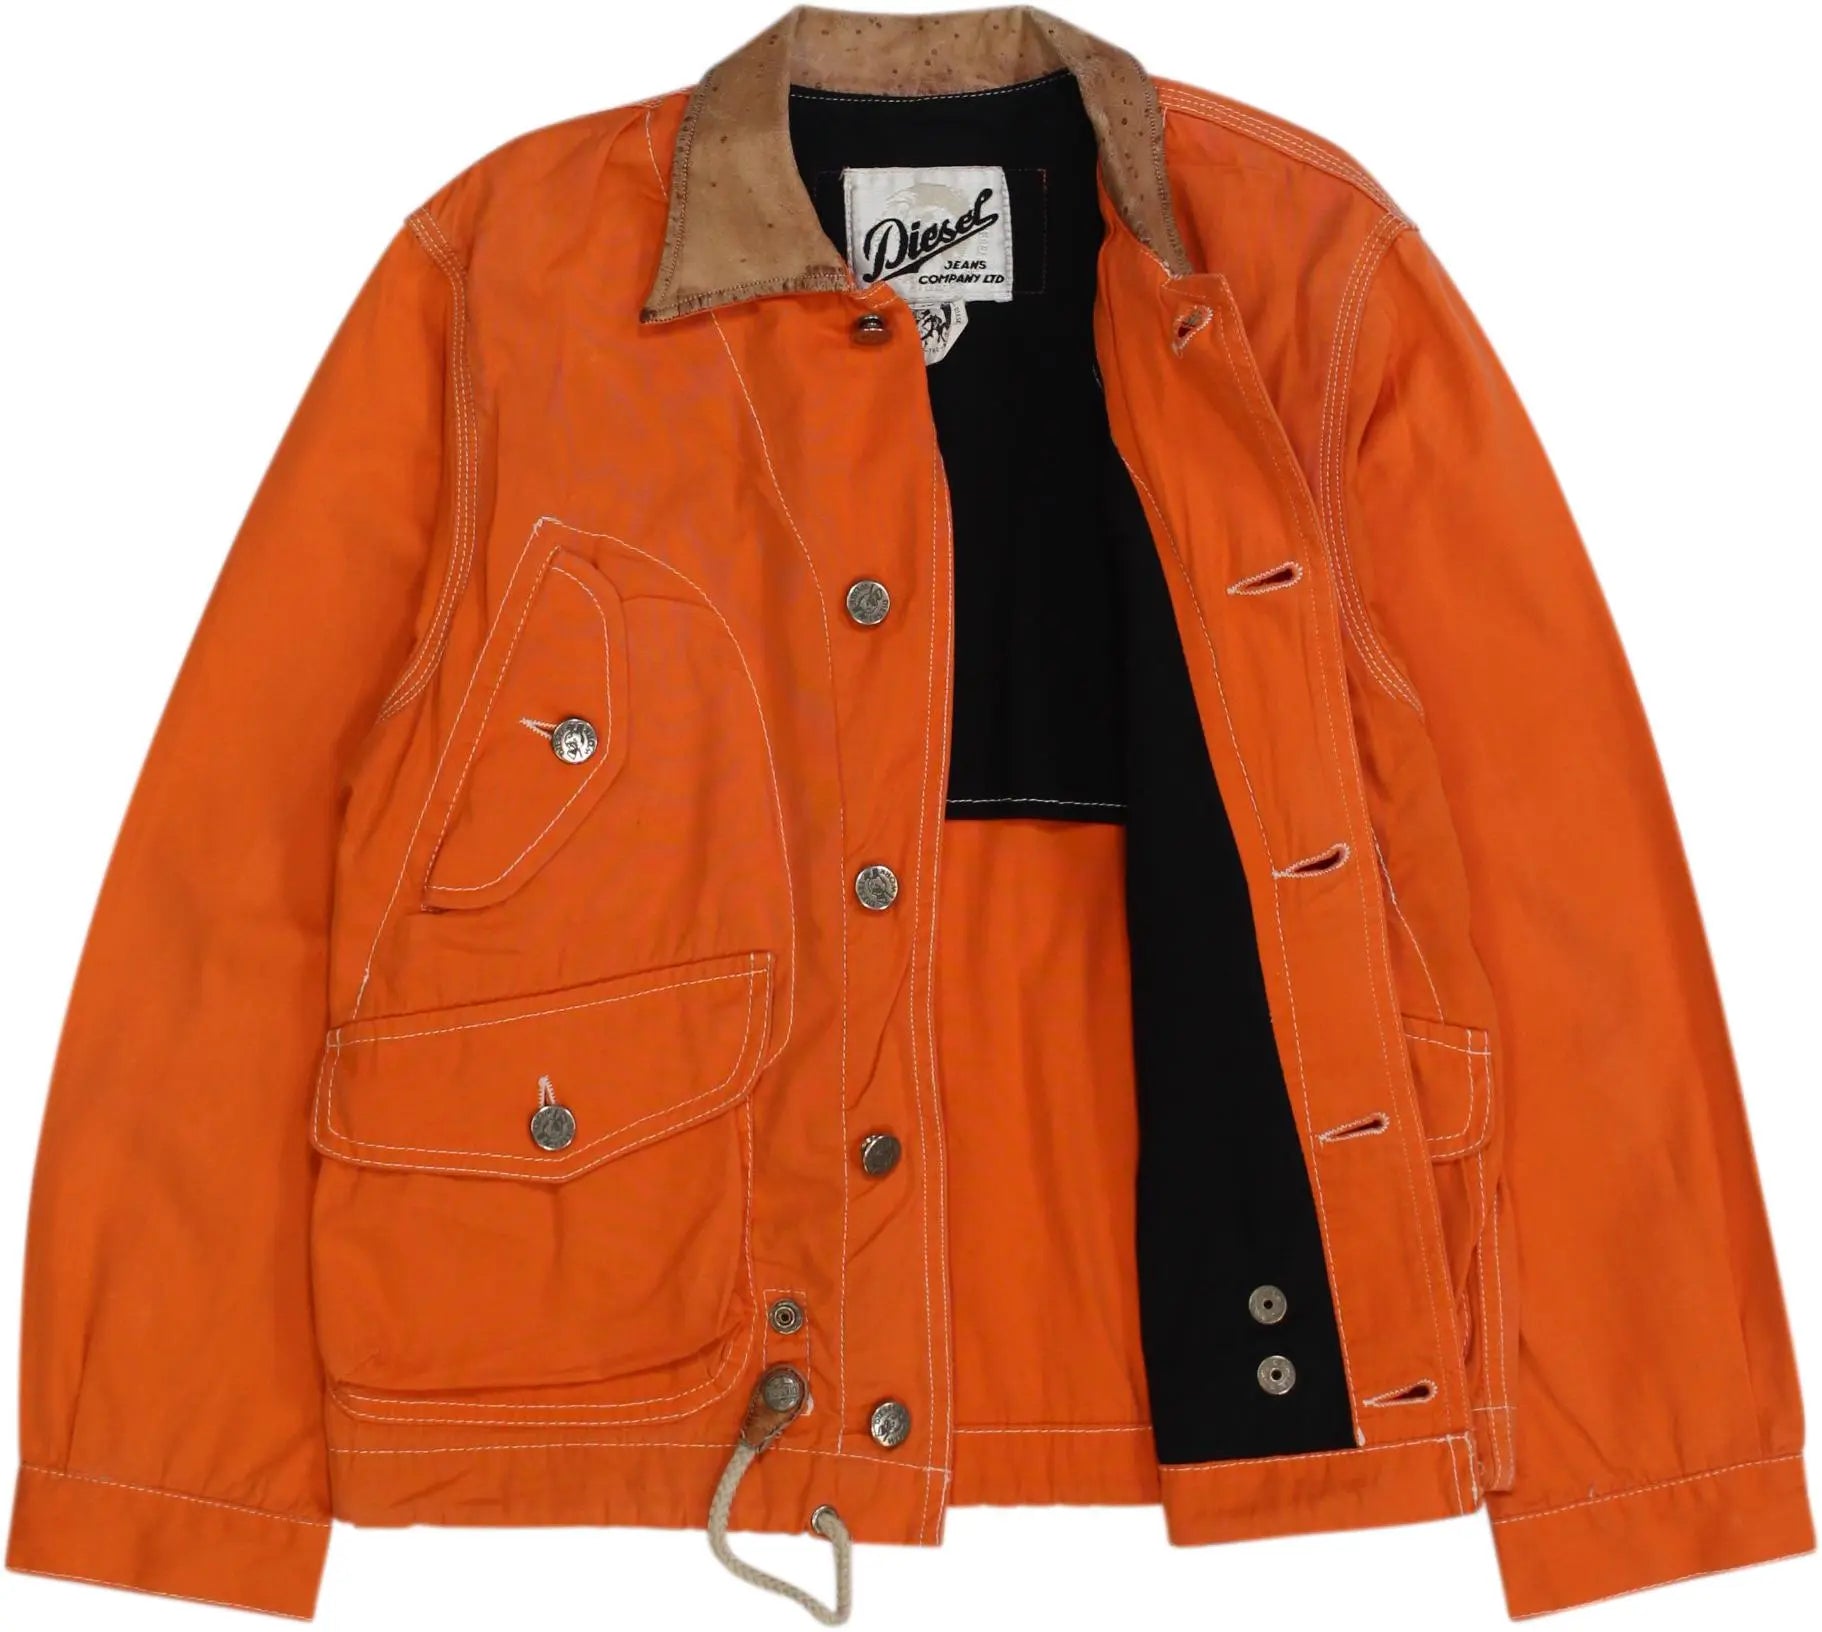 Diesel - Orange Jacket by Diesel- ThriftTale.com - Vintage and second handclothing